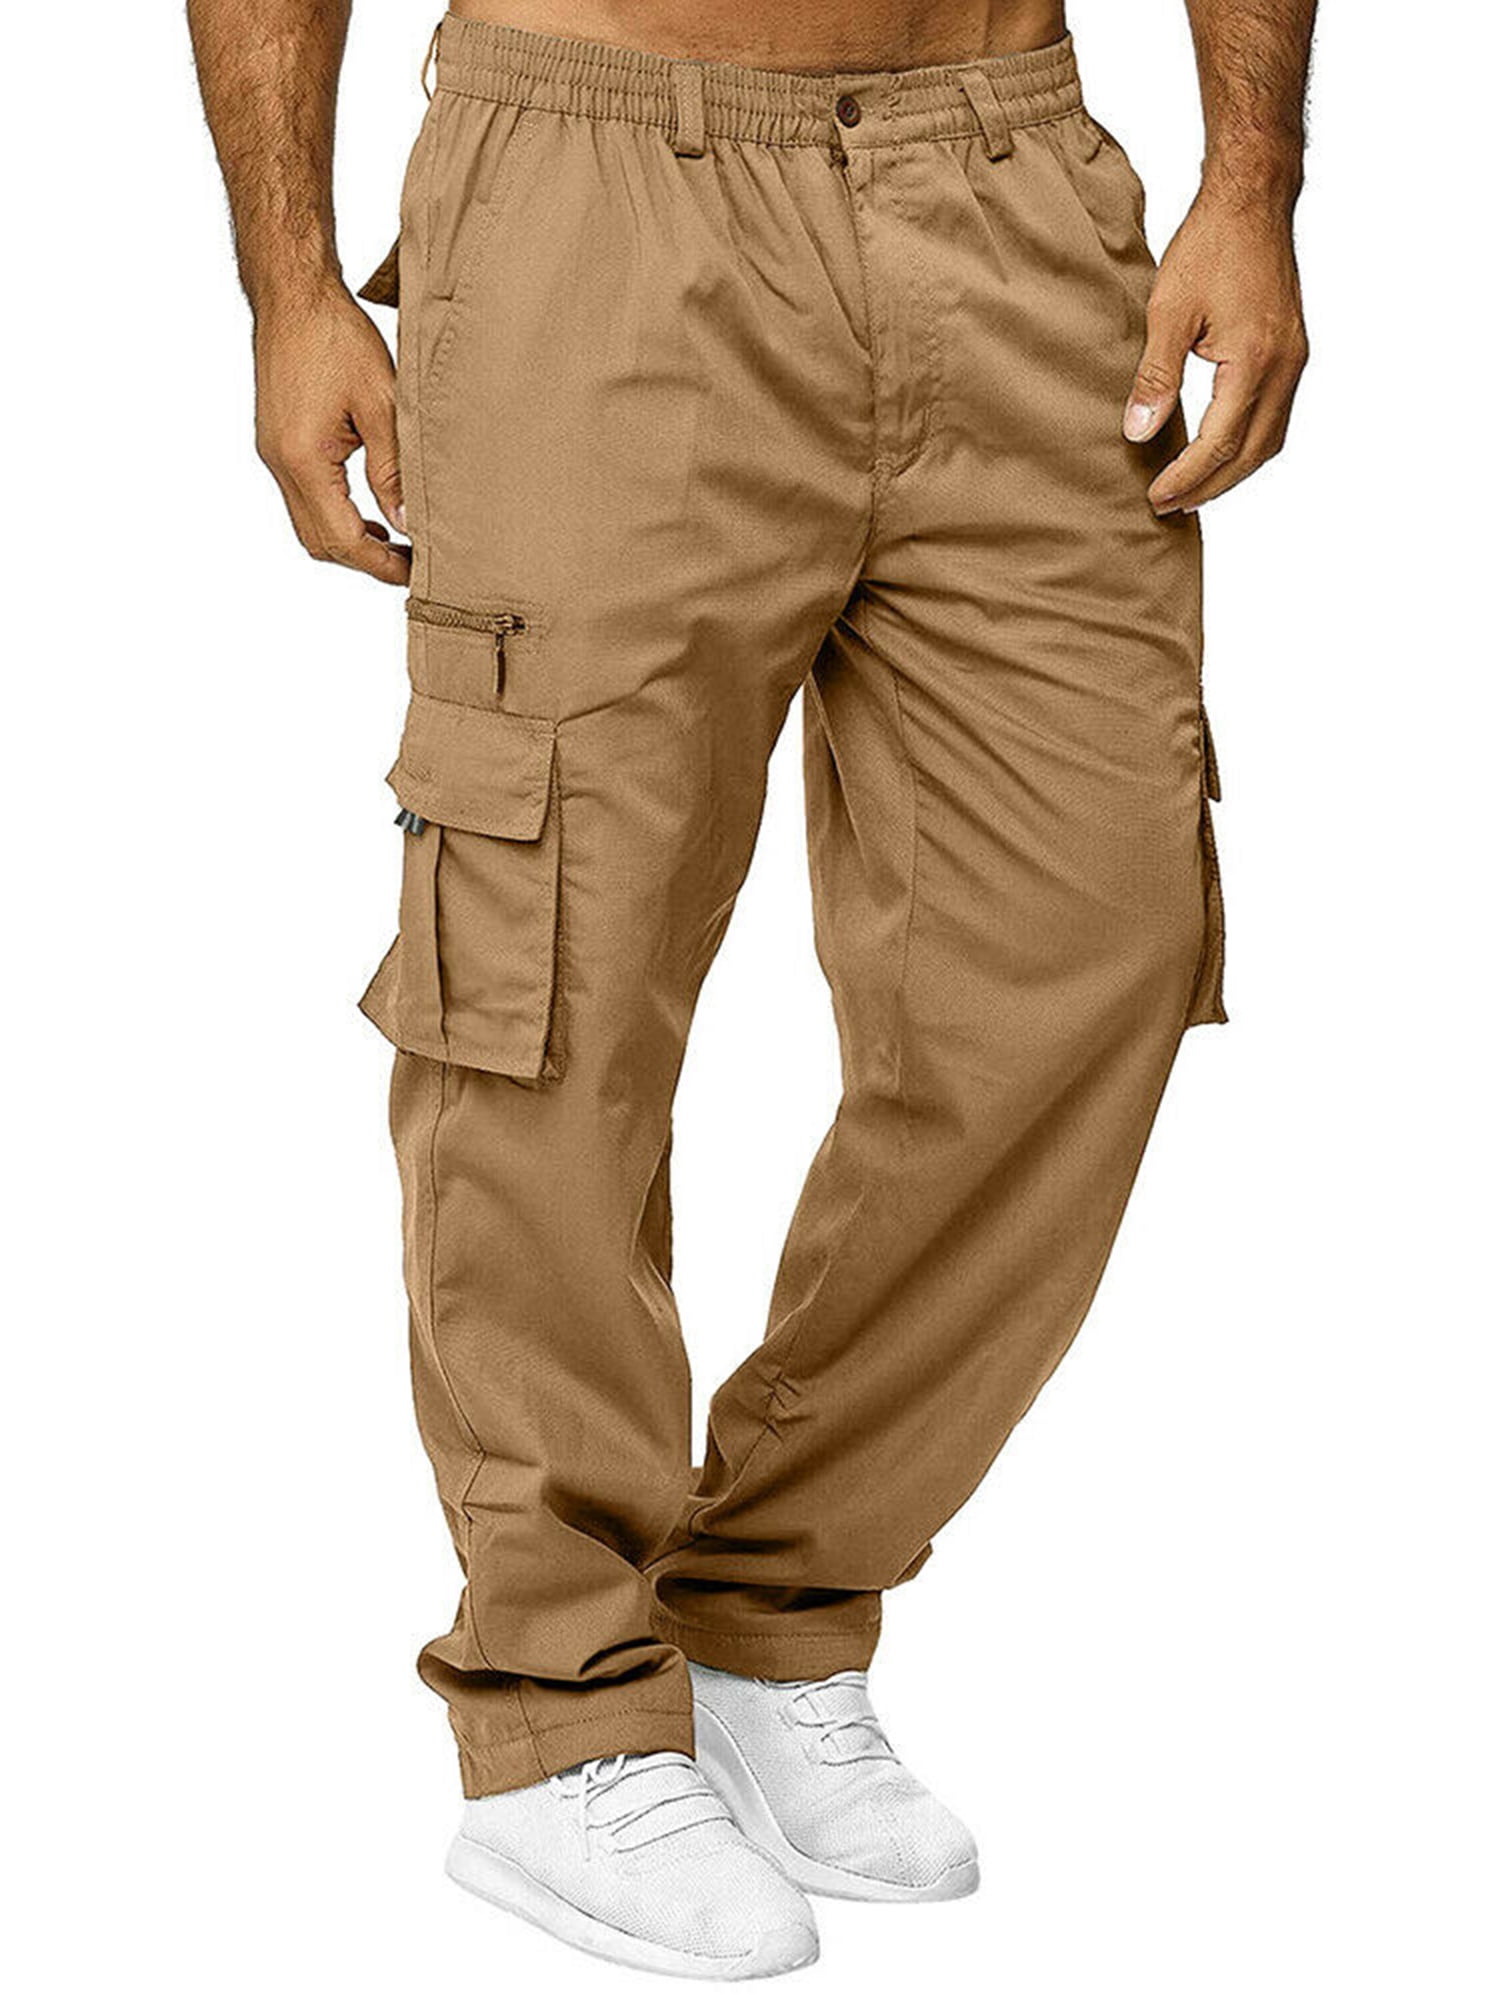 Mens Elasticated Zip Cargo Combat lightweight Cotton Work Trousers Bottoms Pants 